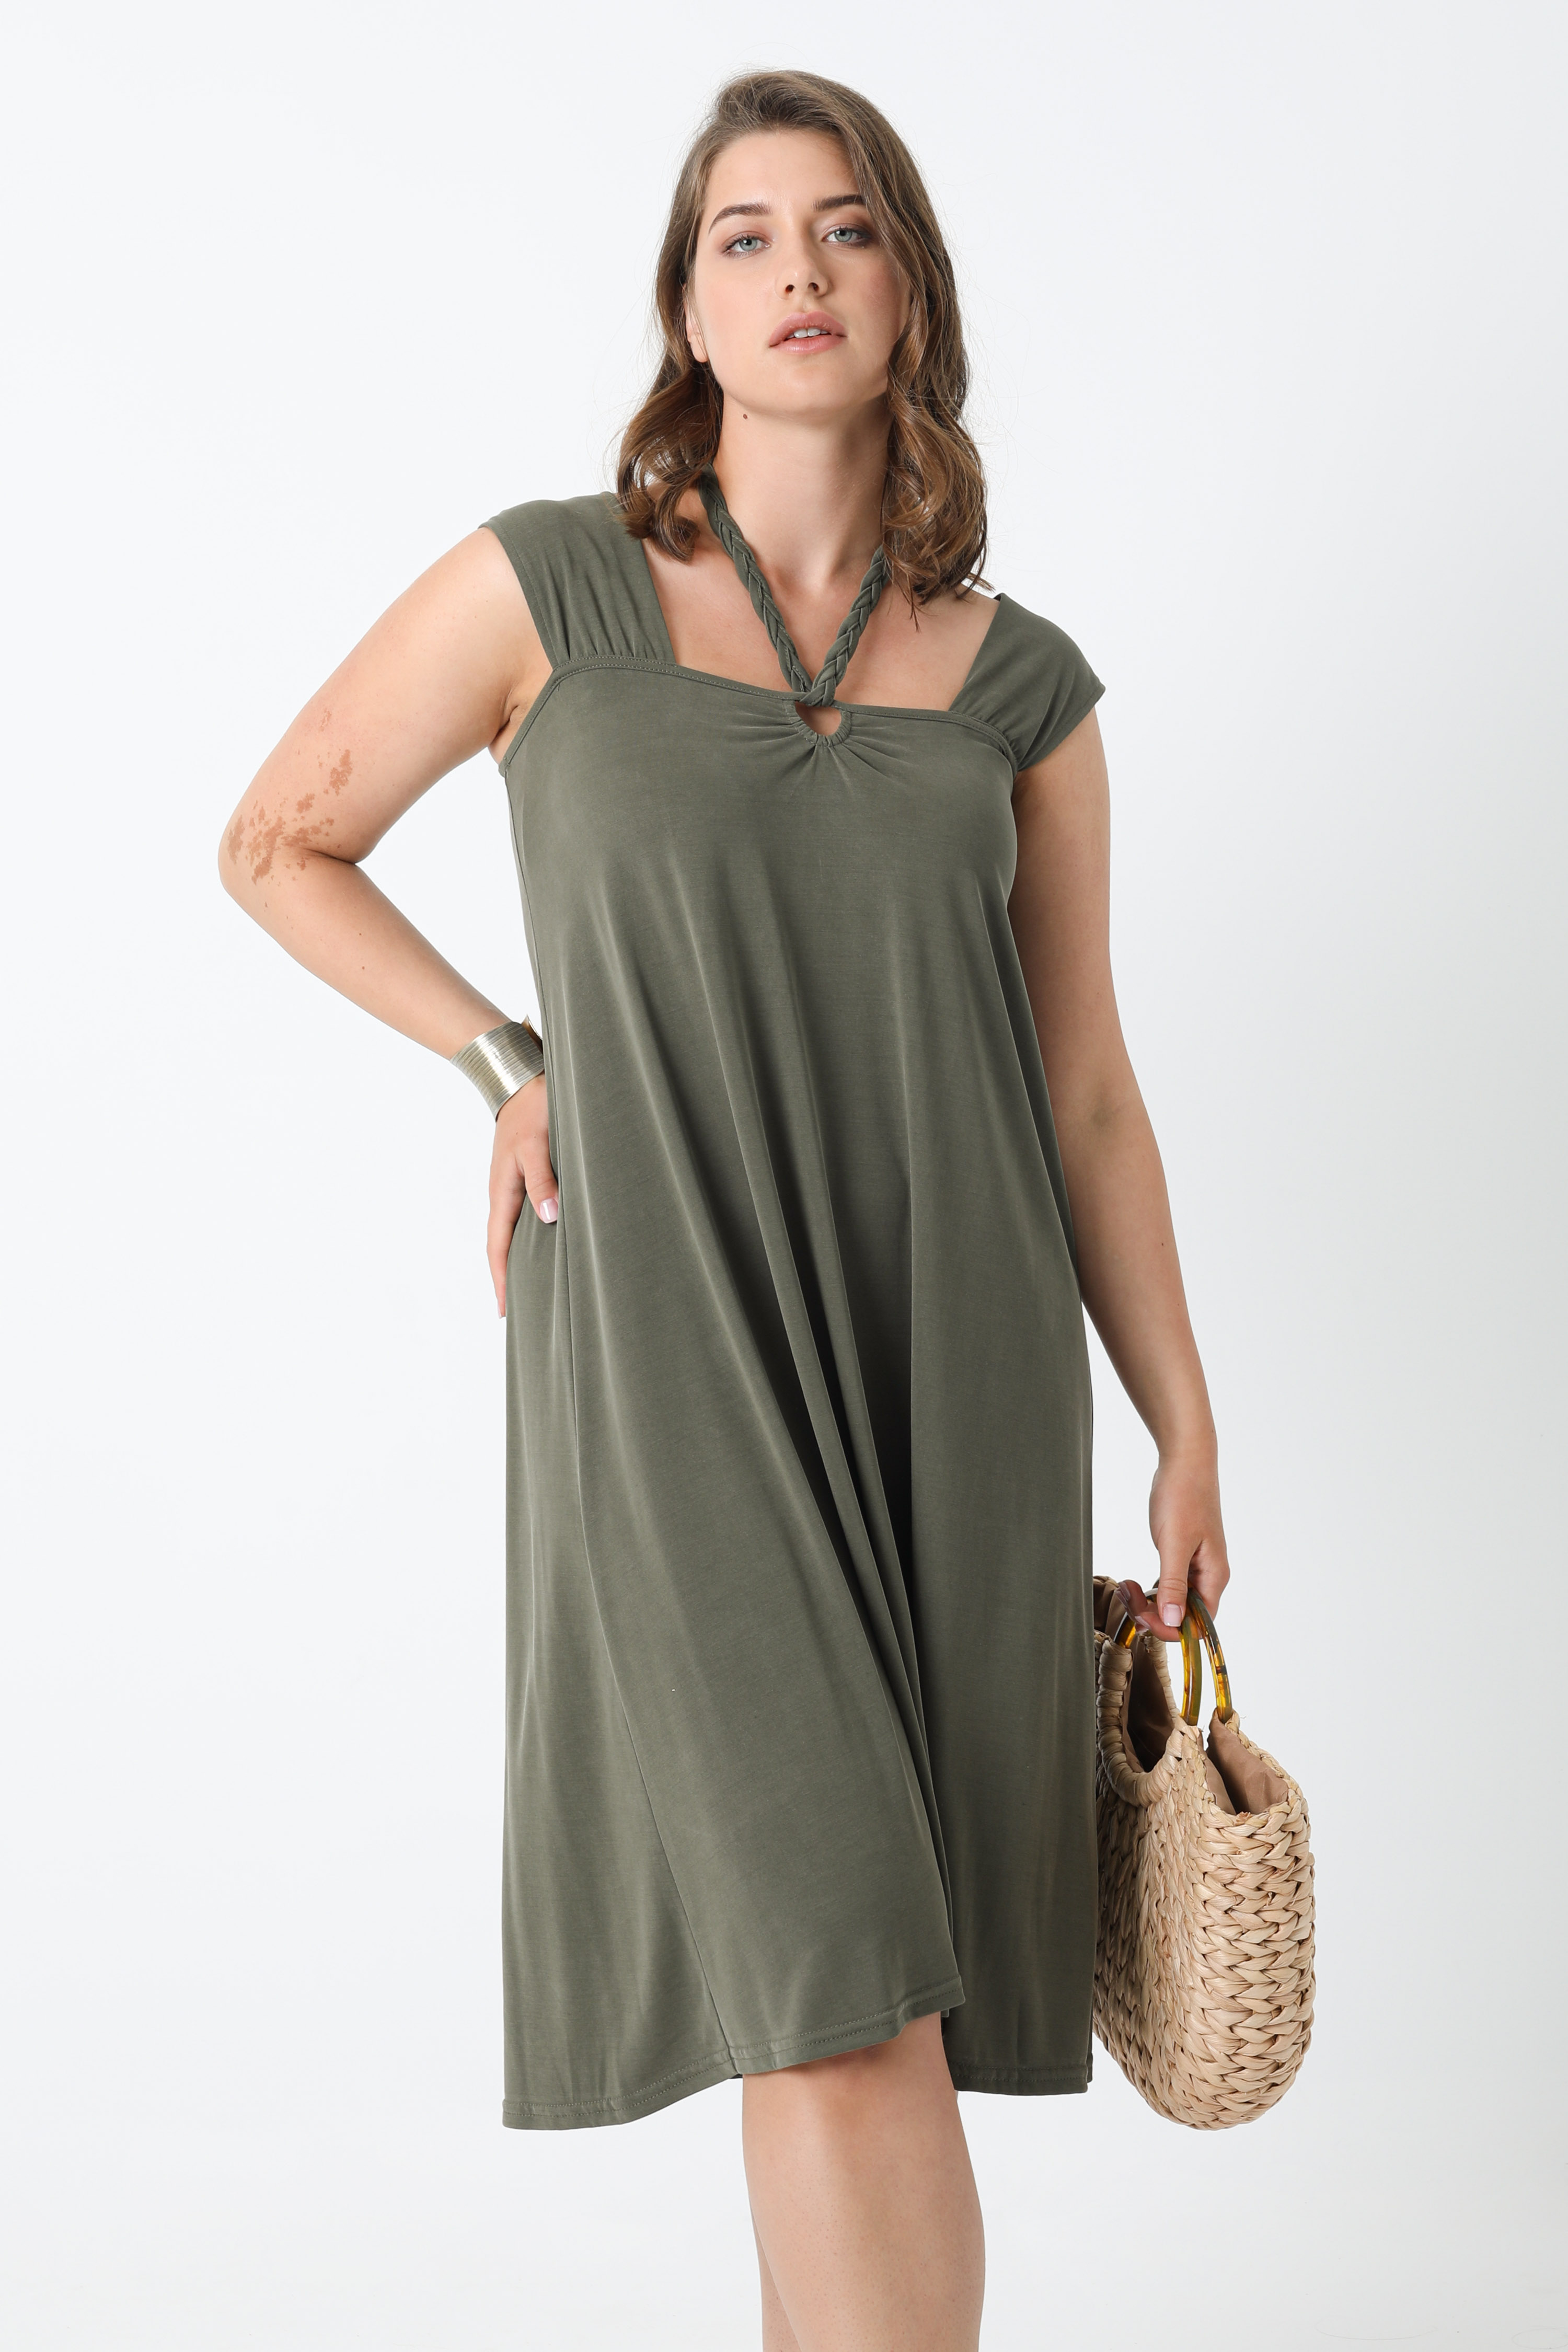 Sleeveless mid-length modal dress